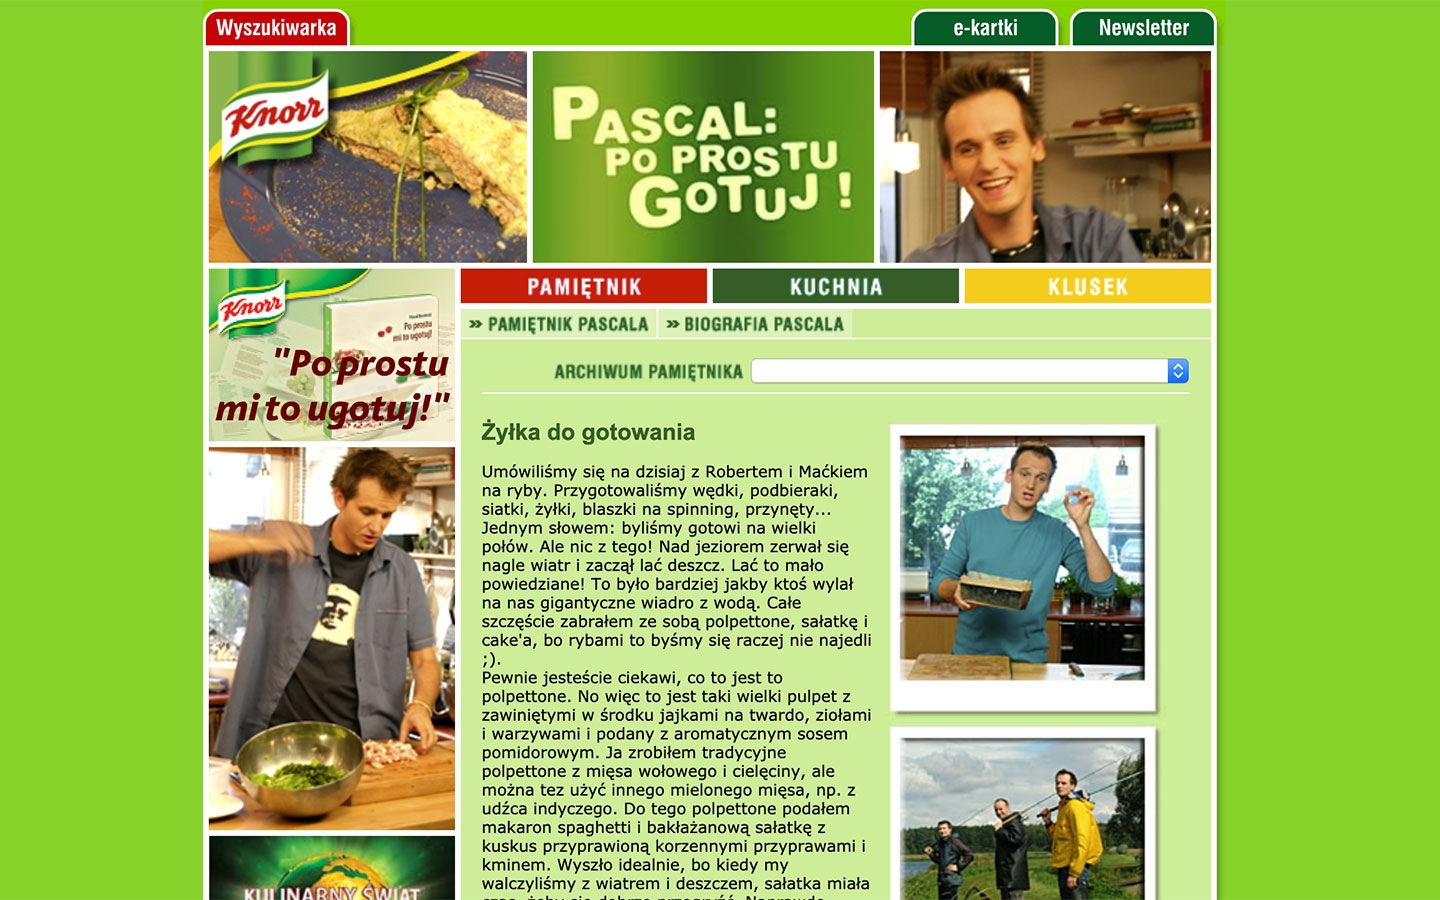 Pascal: Po Prostu Gotuj! | poprostugotuj.onet.pl | 2004 (Screen Only 05) © echonet communication